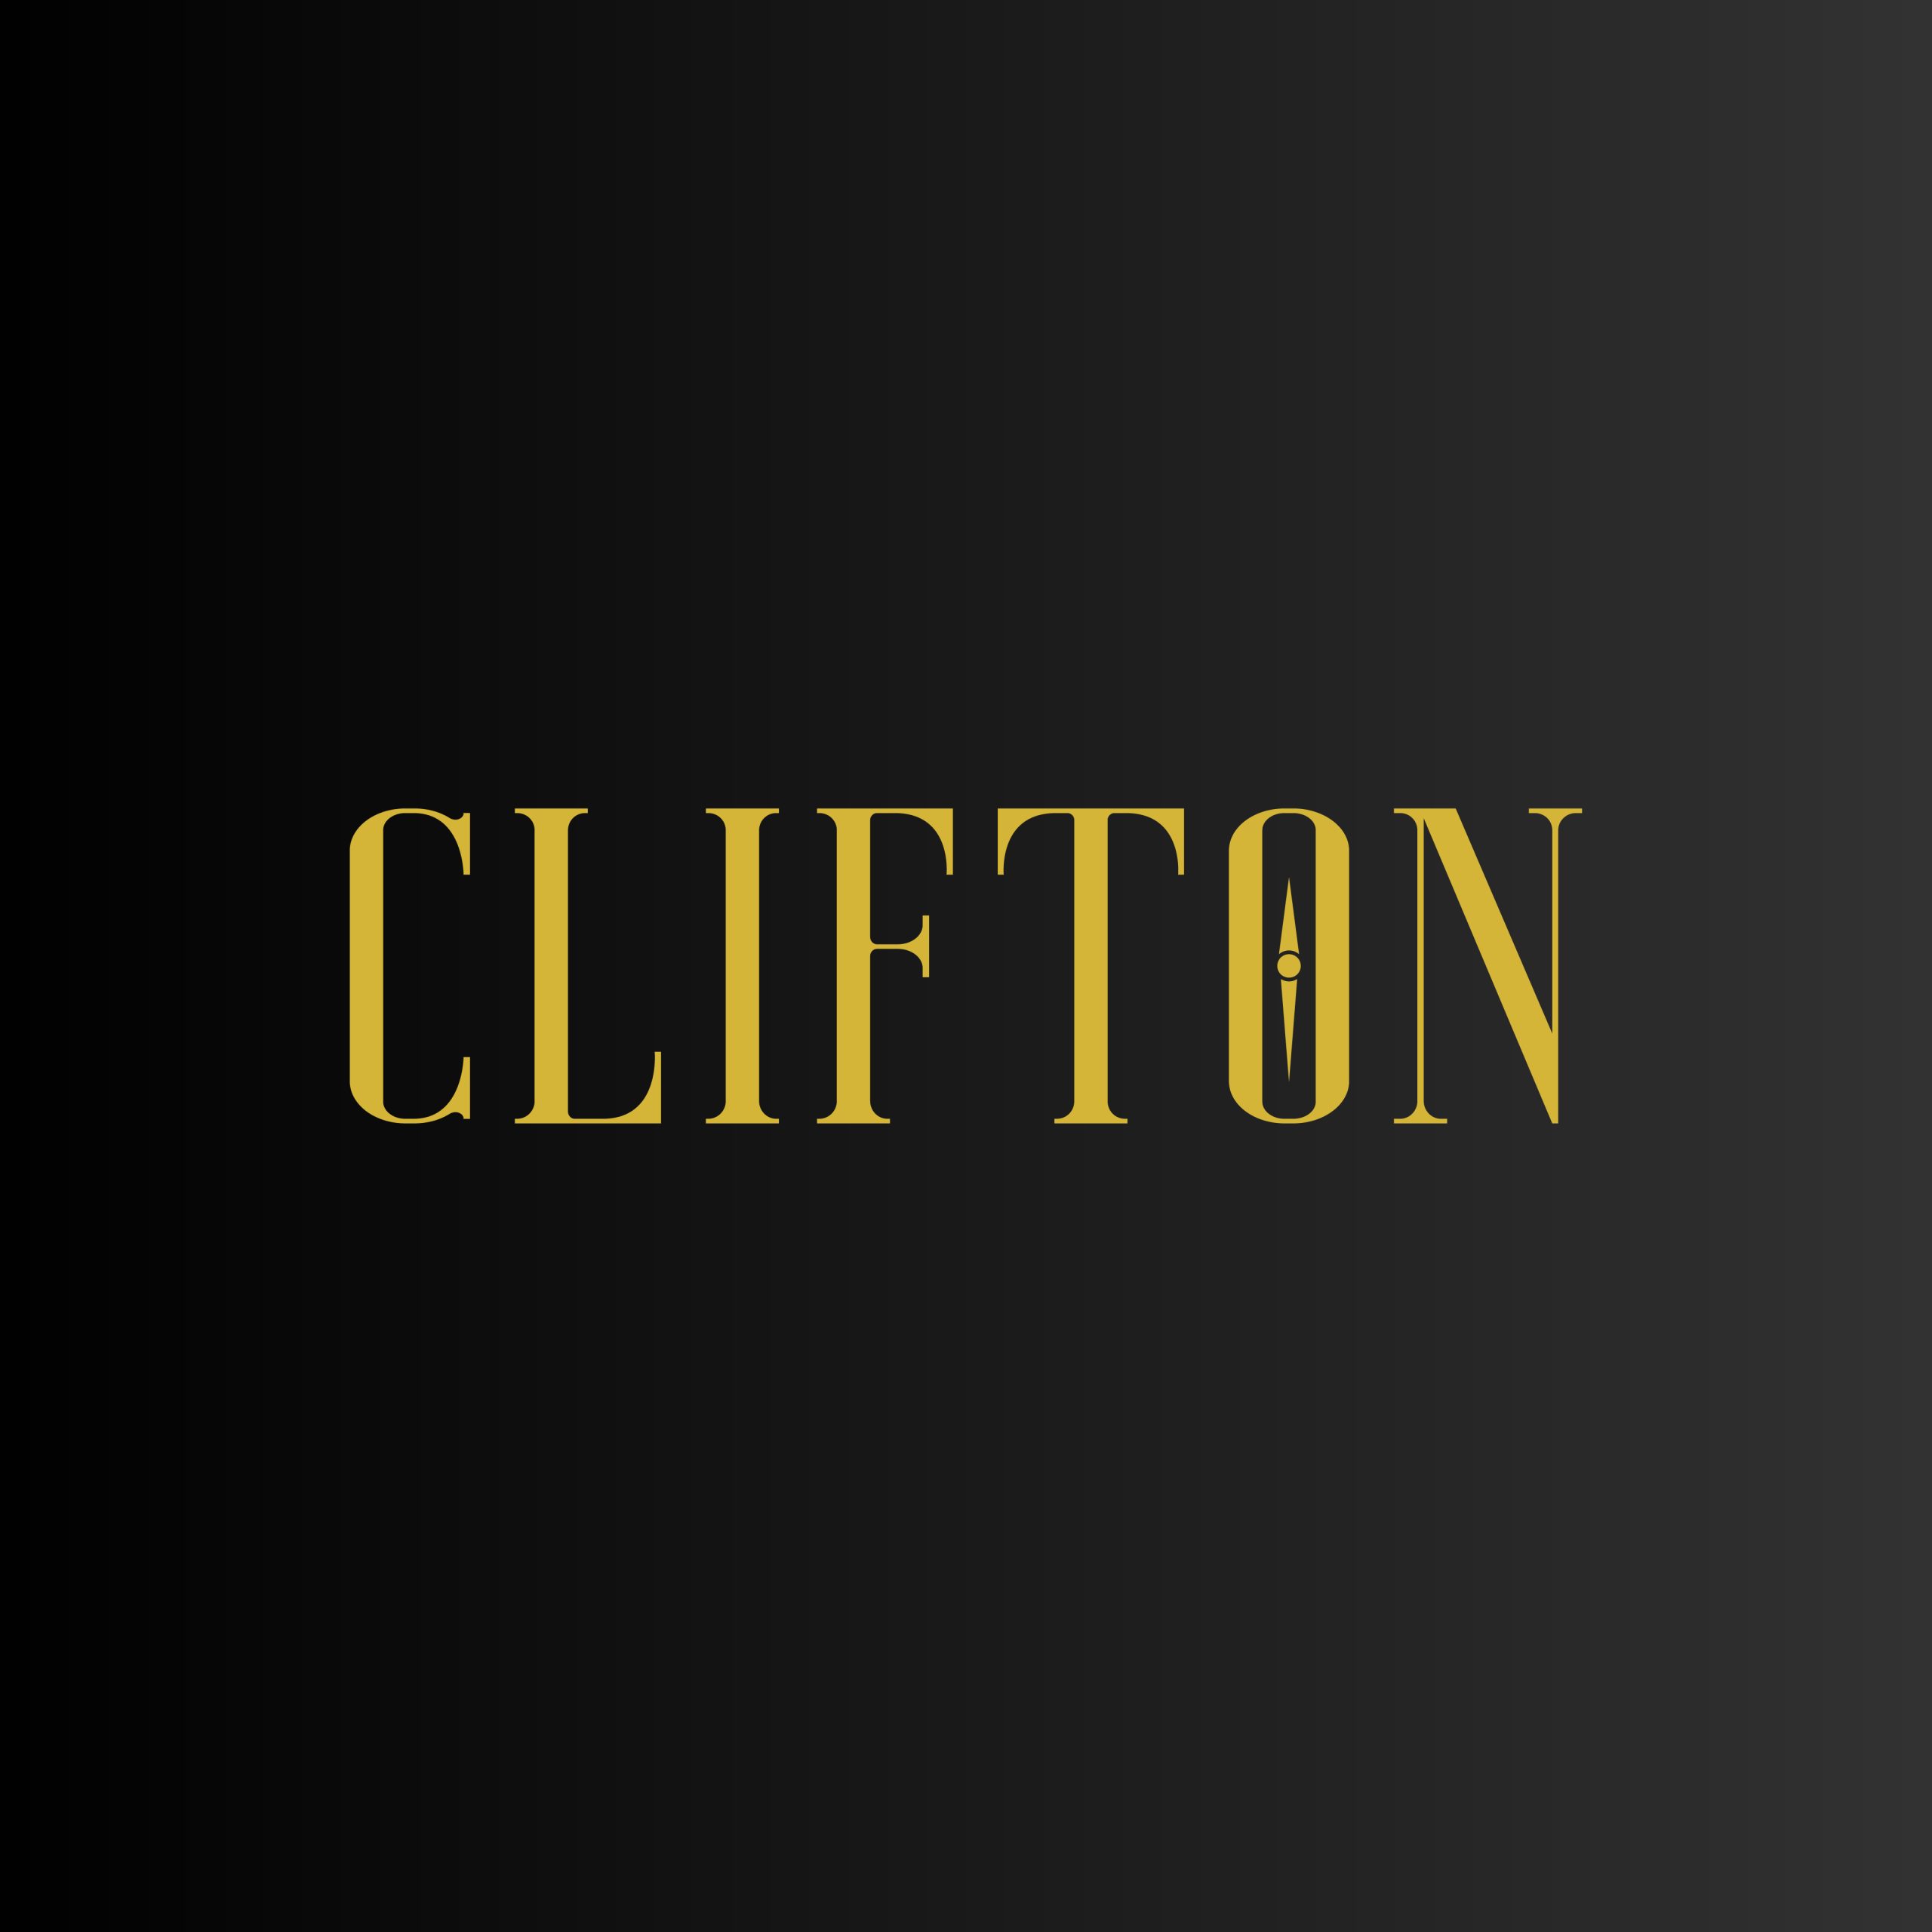 Clifton-Golden-scaled.jpg